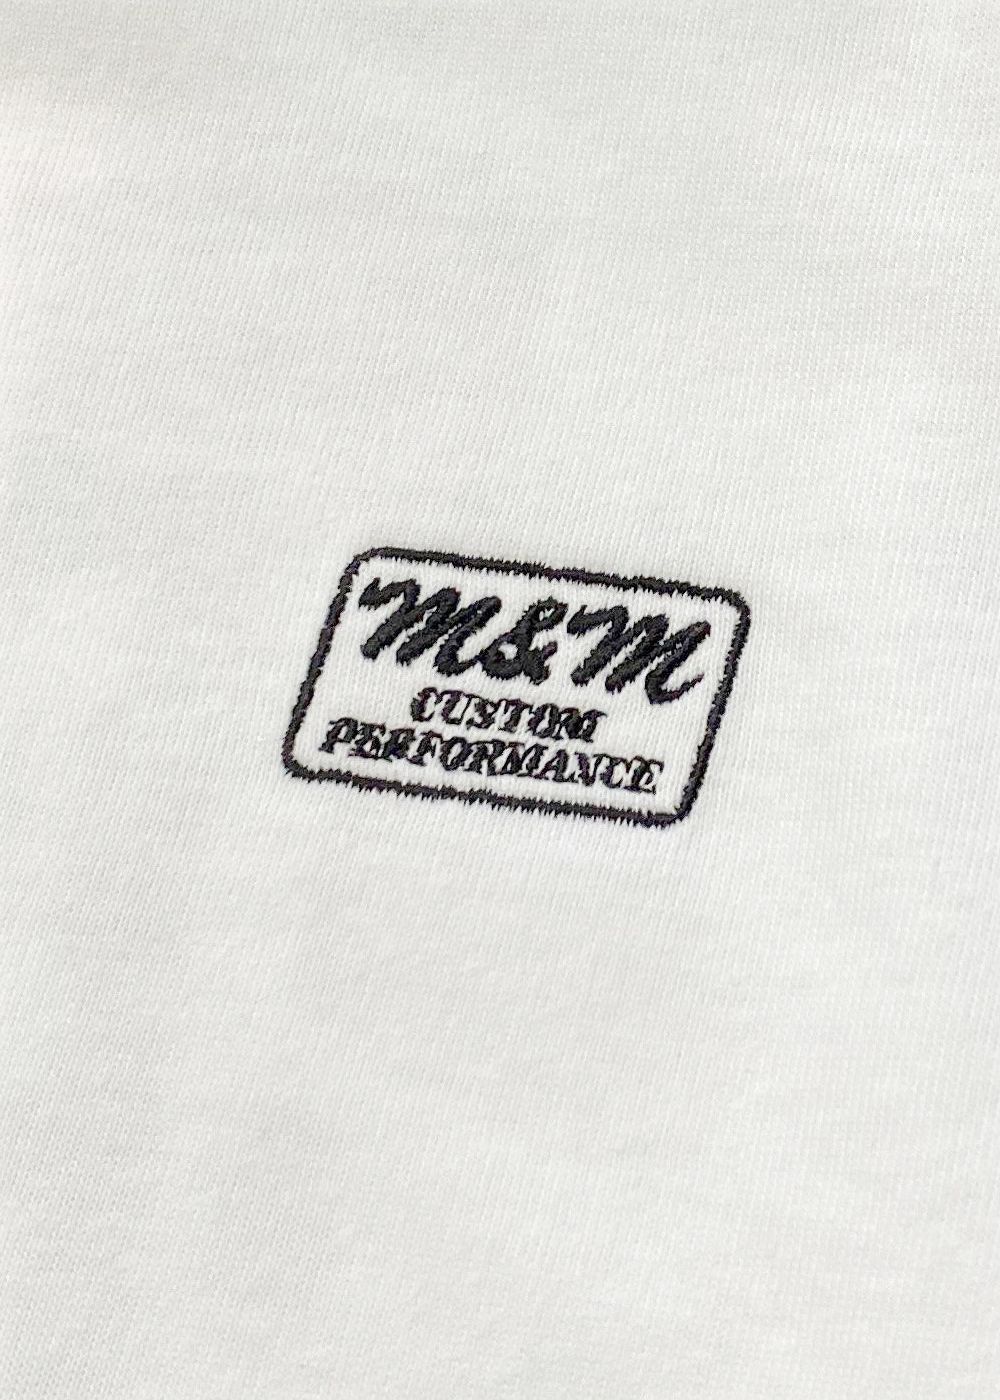 M&M CUSTOM PERFORMANCE - RAGLAN T-SHIRT (WHITE×GREEN) / ラグラン 